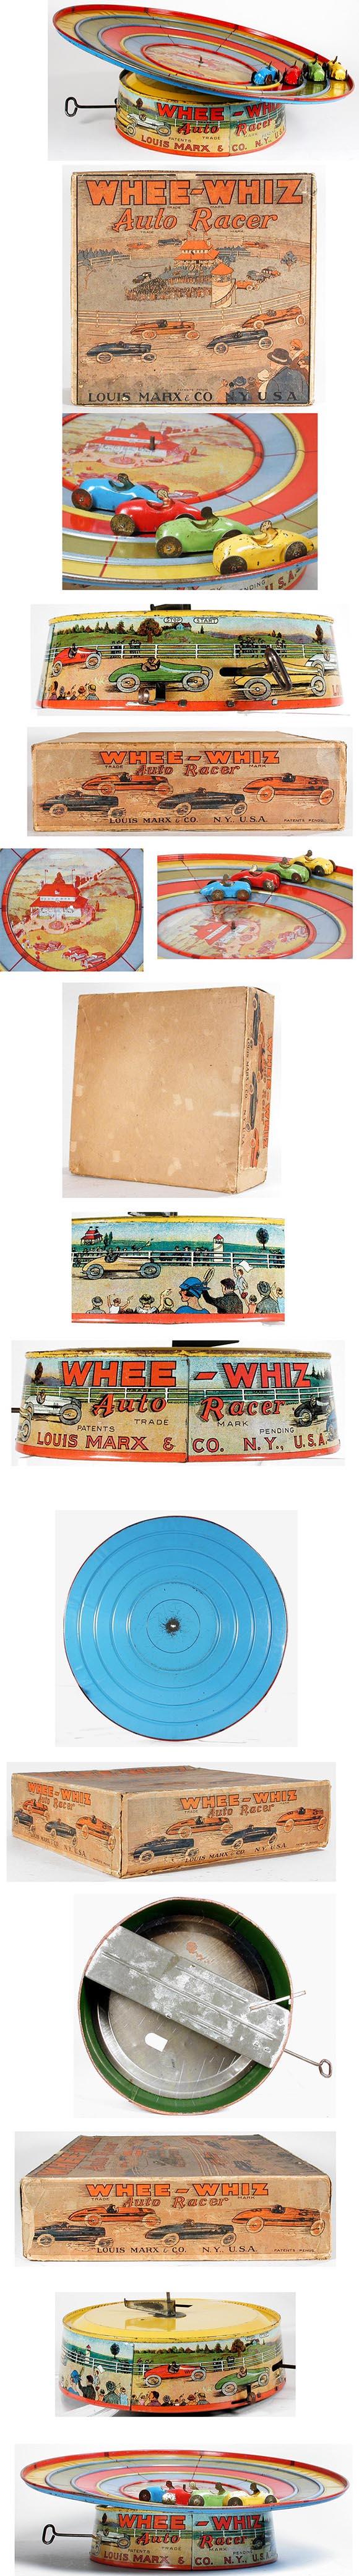 1925 Marx, Whee-Whiz Auto RacerÂ in Original Box